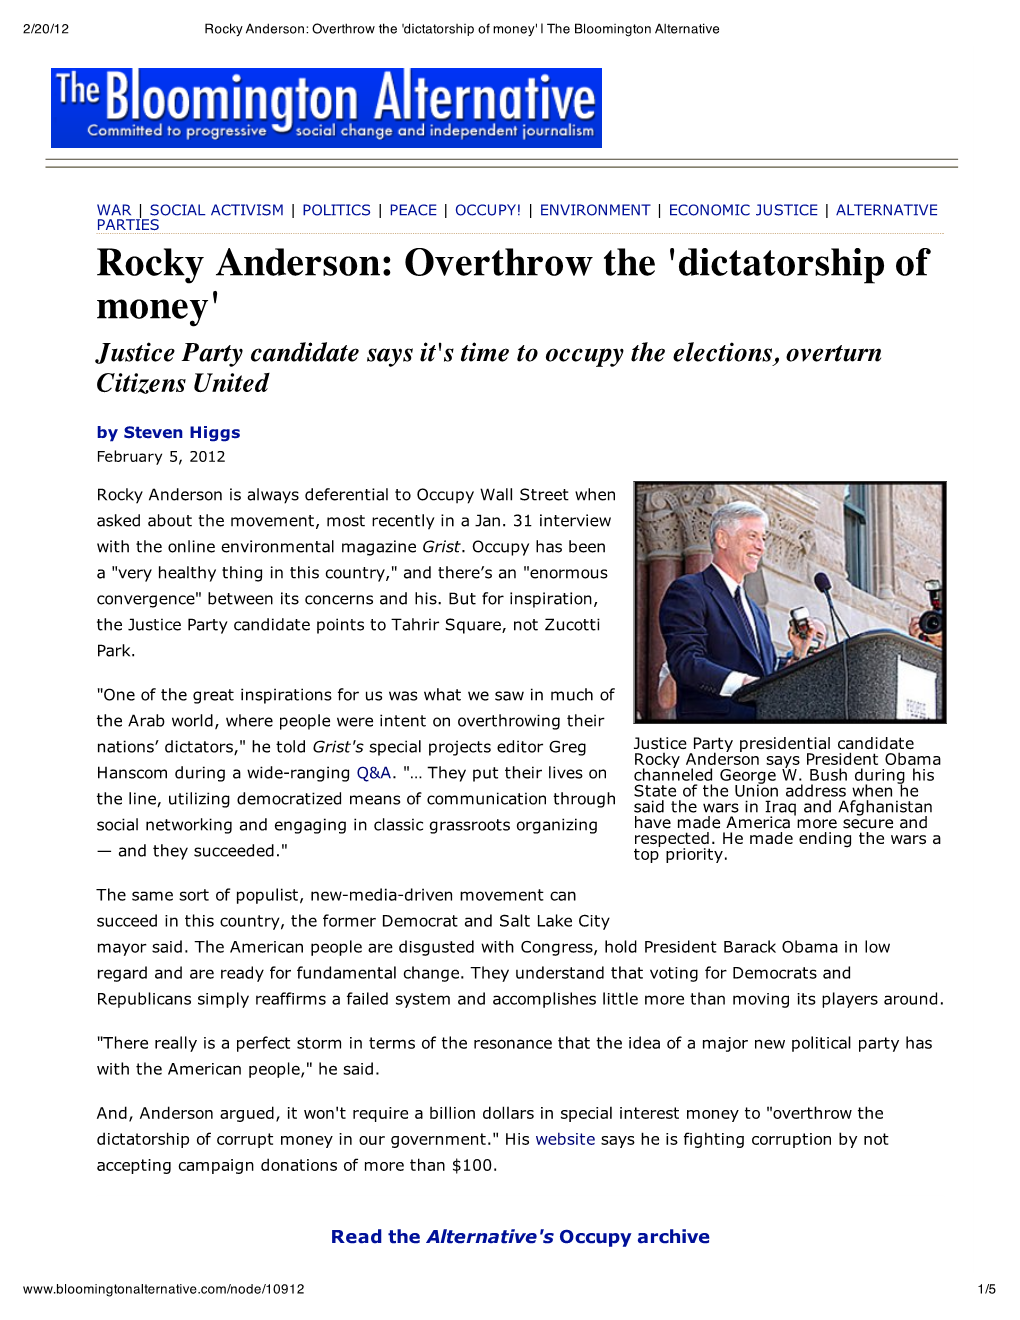 Rocky Anderson: Overthrow the 'Dictatorship of Money' | the Bloomington Alternative